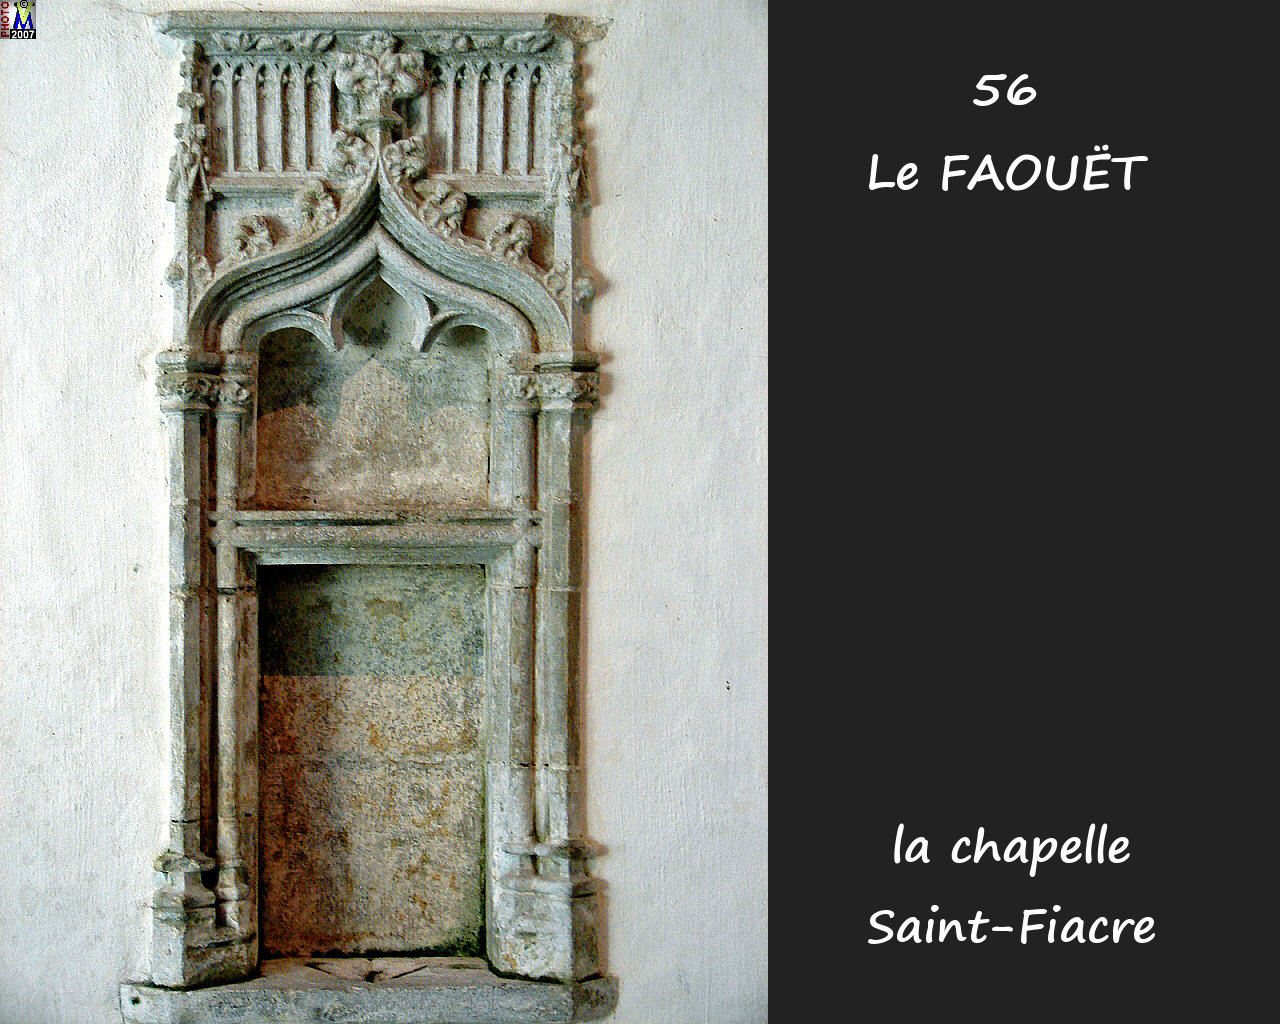 56FAOUET_chapelle-fiacre_280.jpg